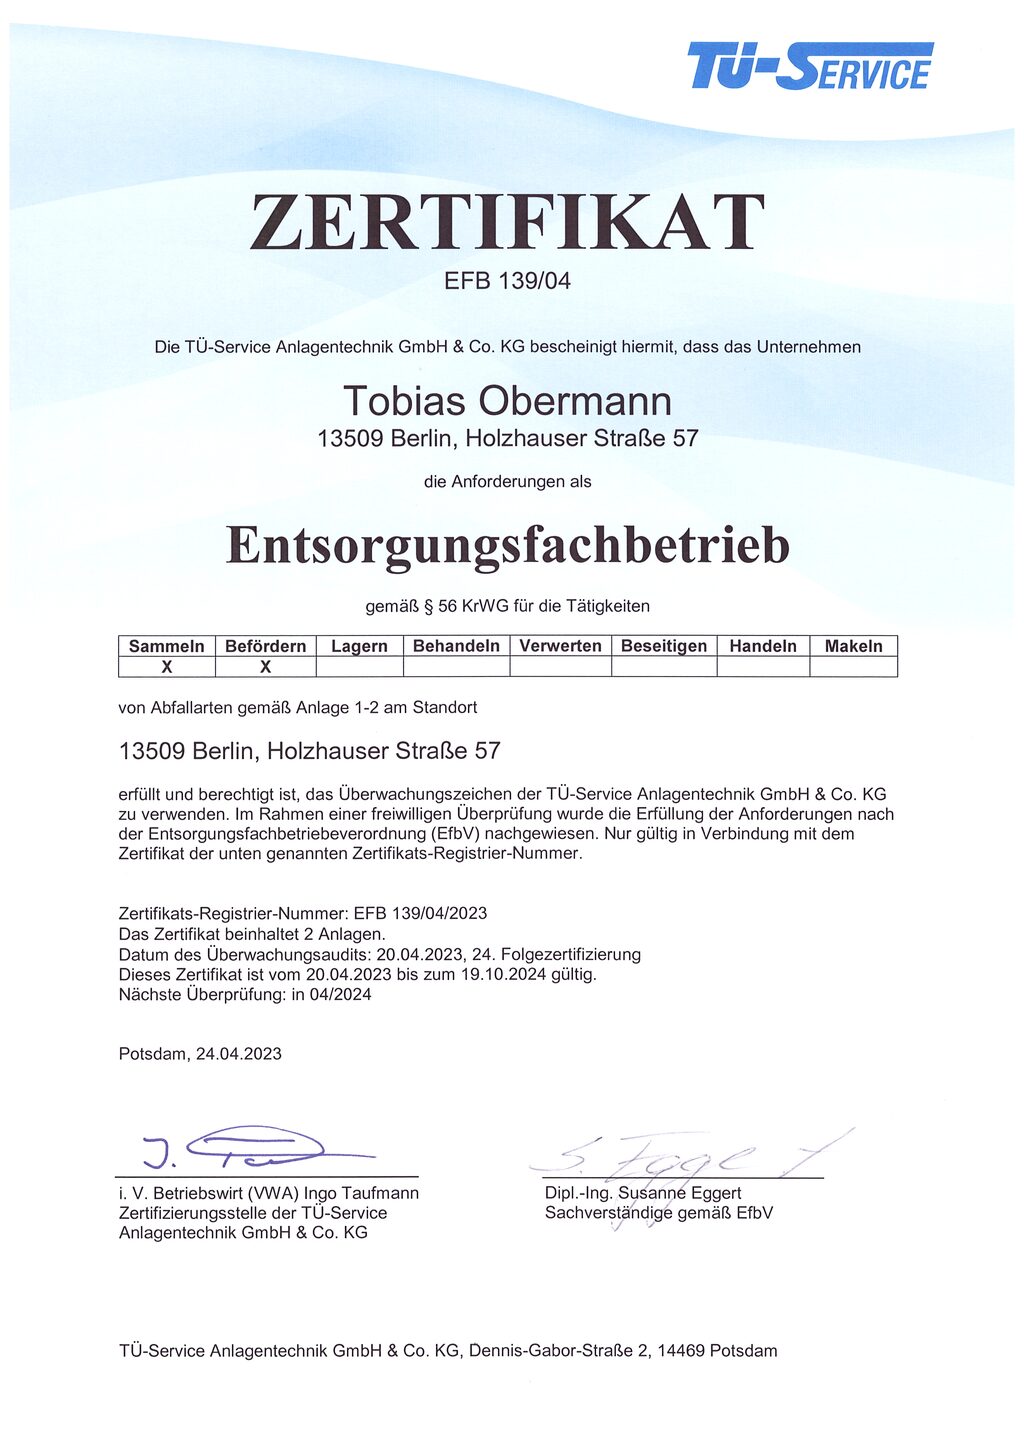 Öltankentsorgung Klaus Obermann Berlin - Zertifikat